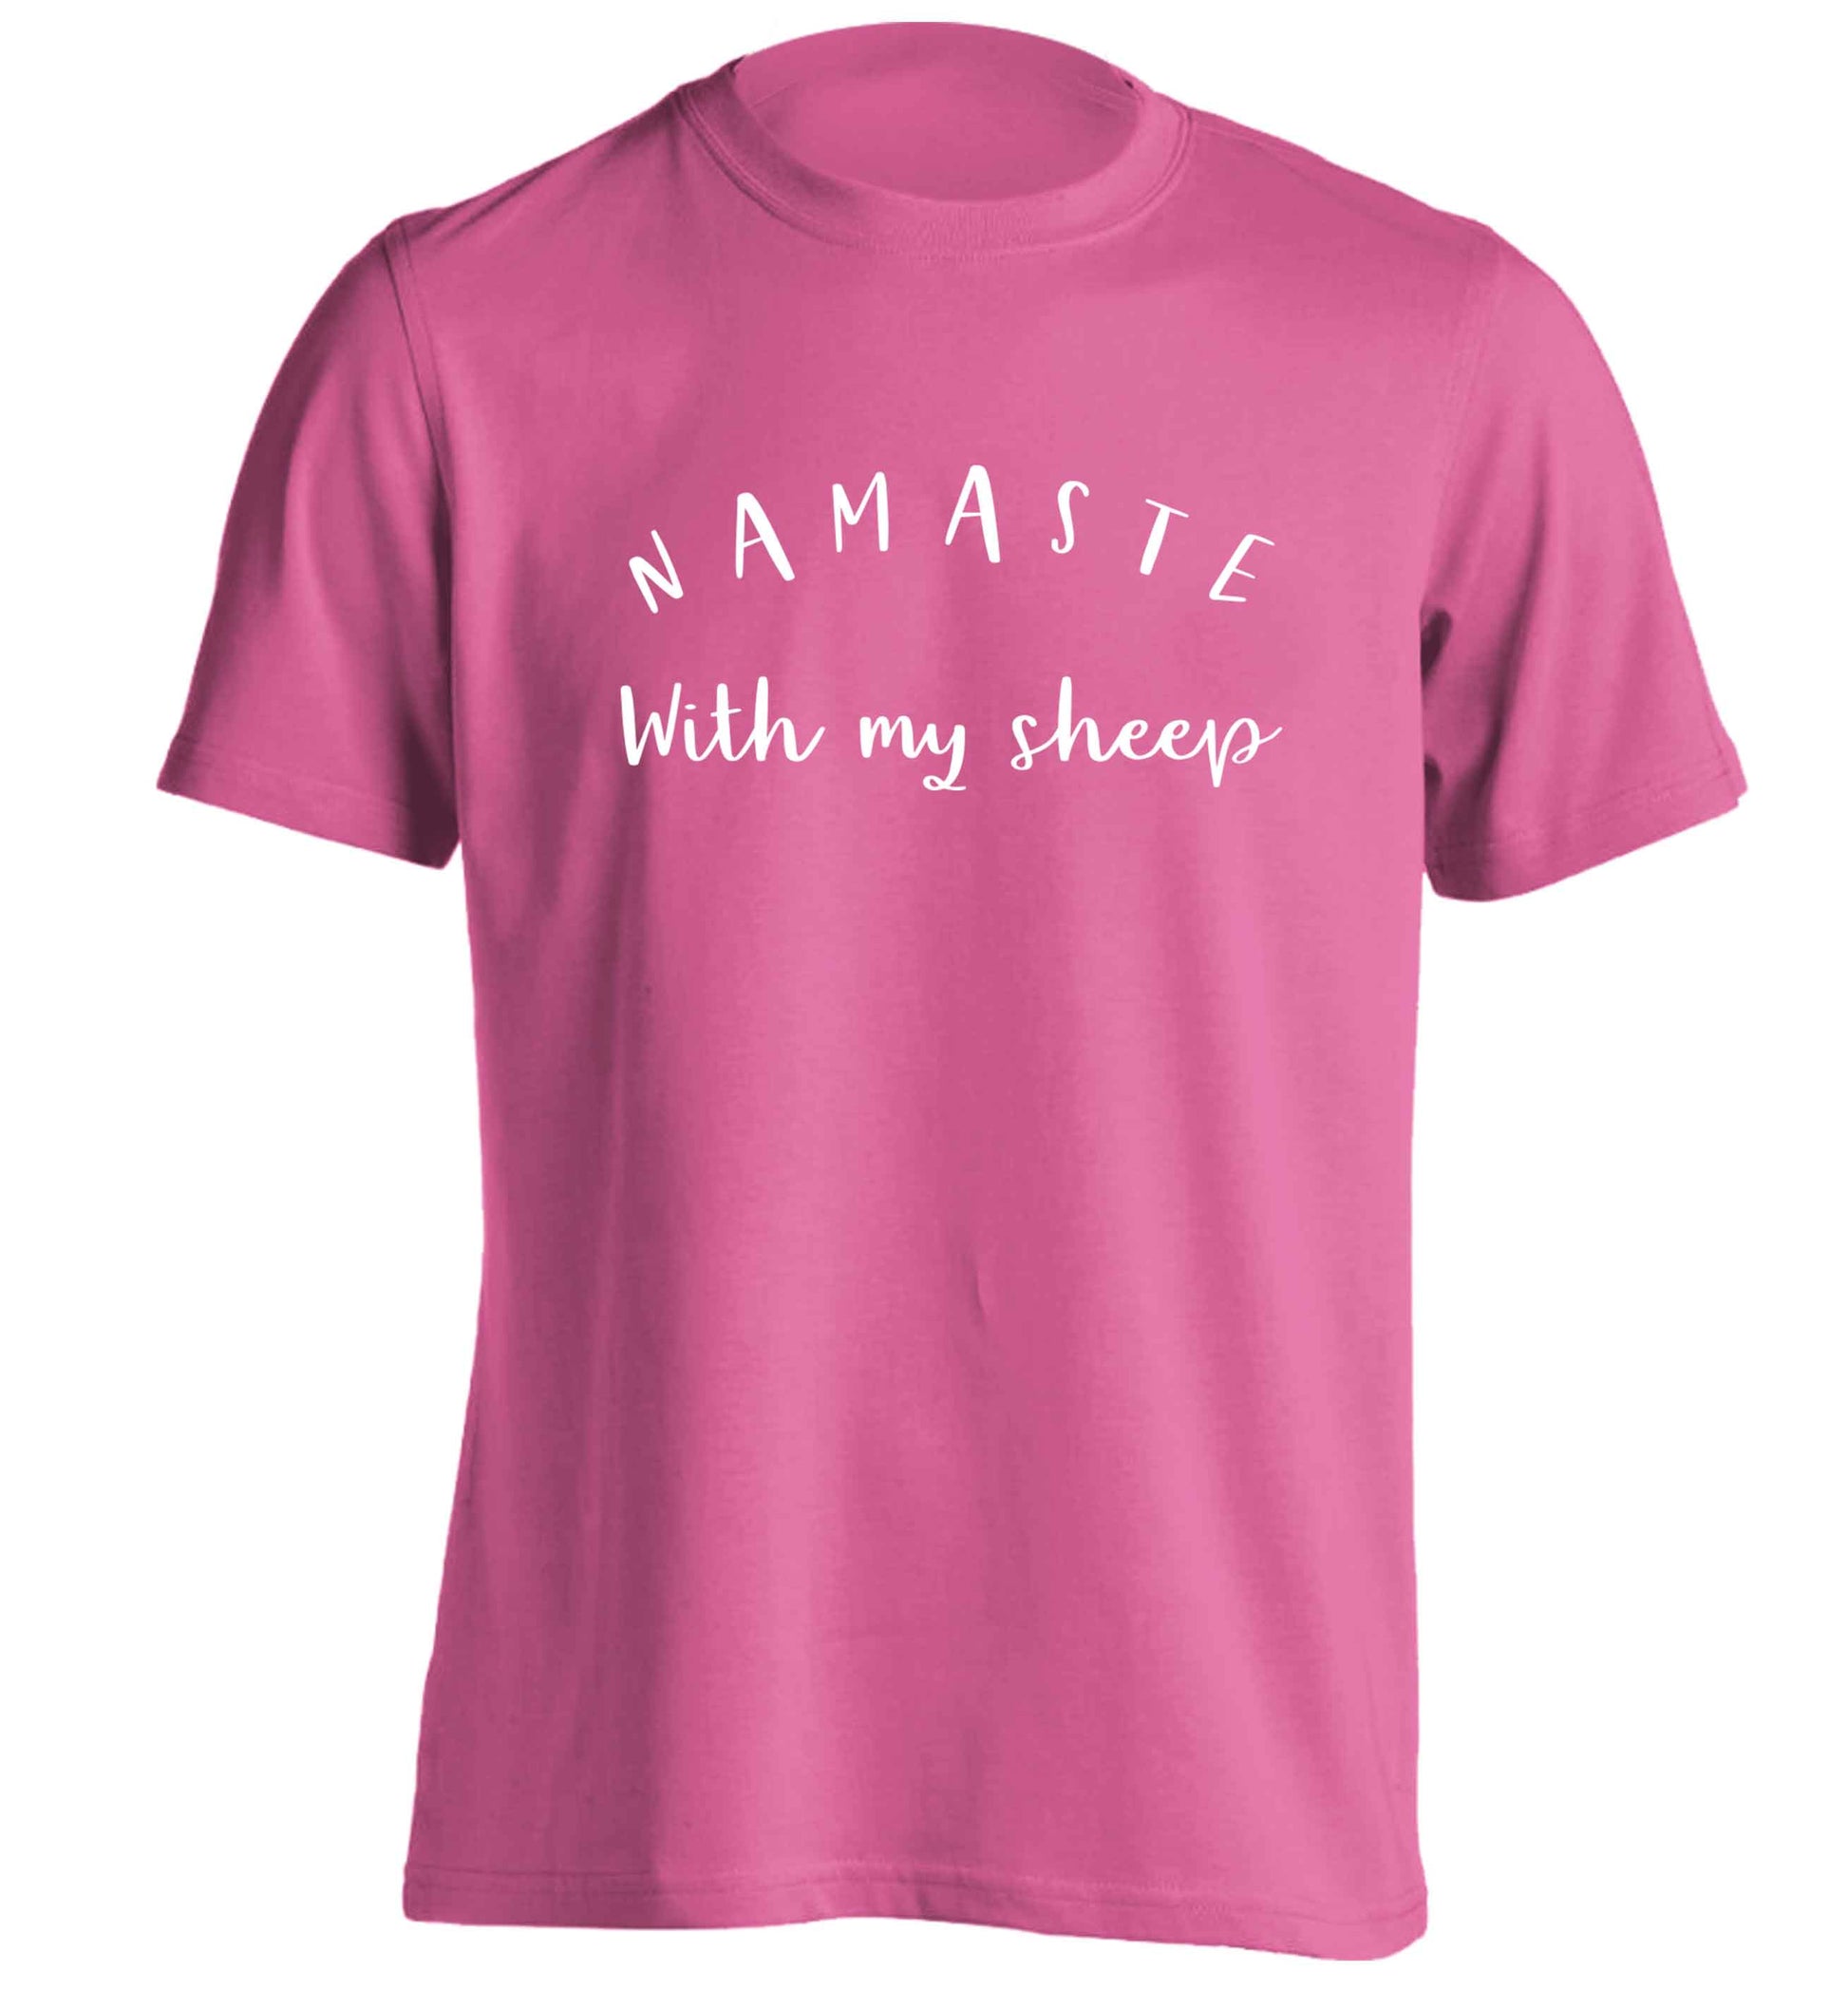 Namaste with my sheep adults unisex pink Tshirt 2XL